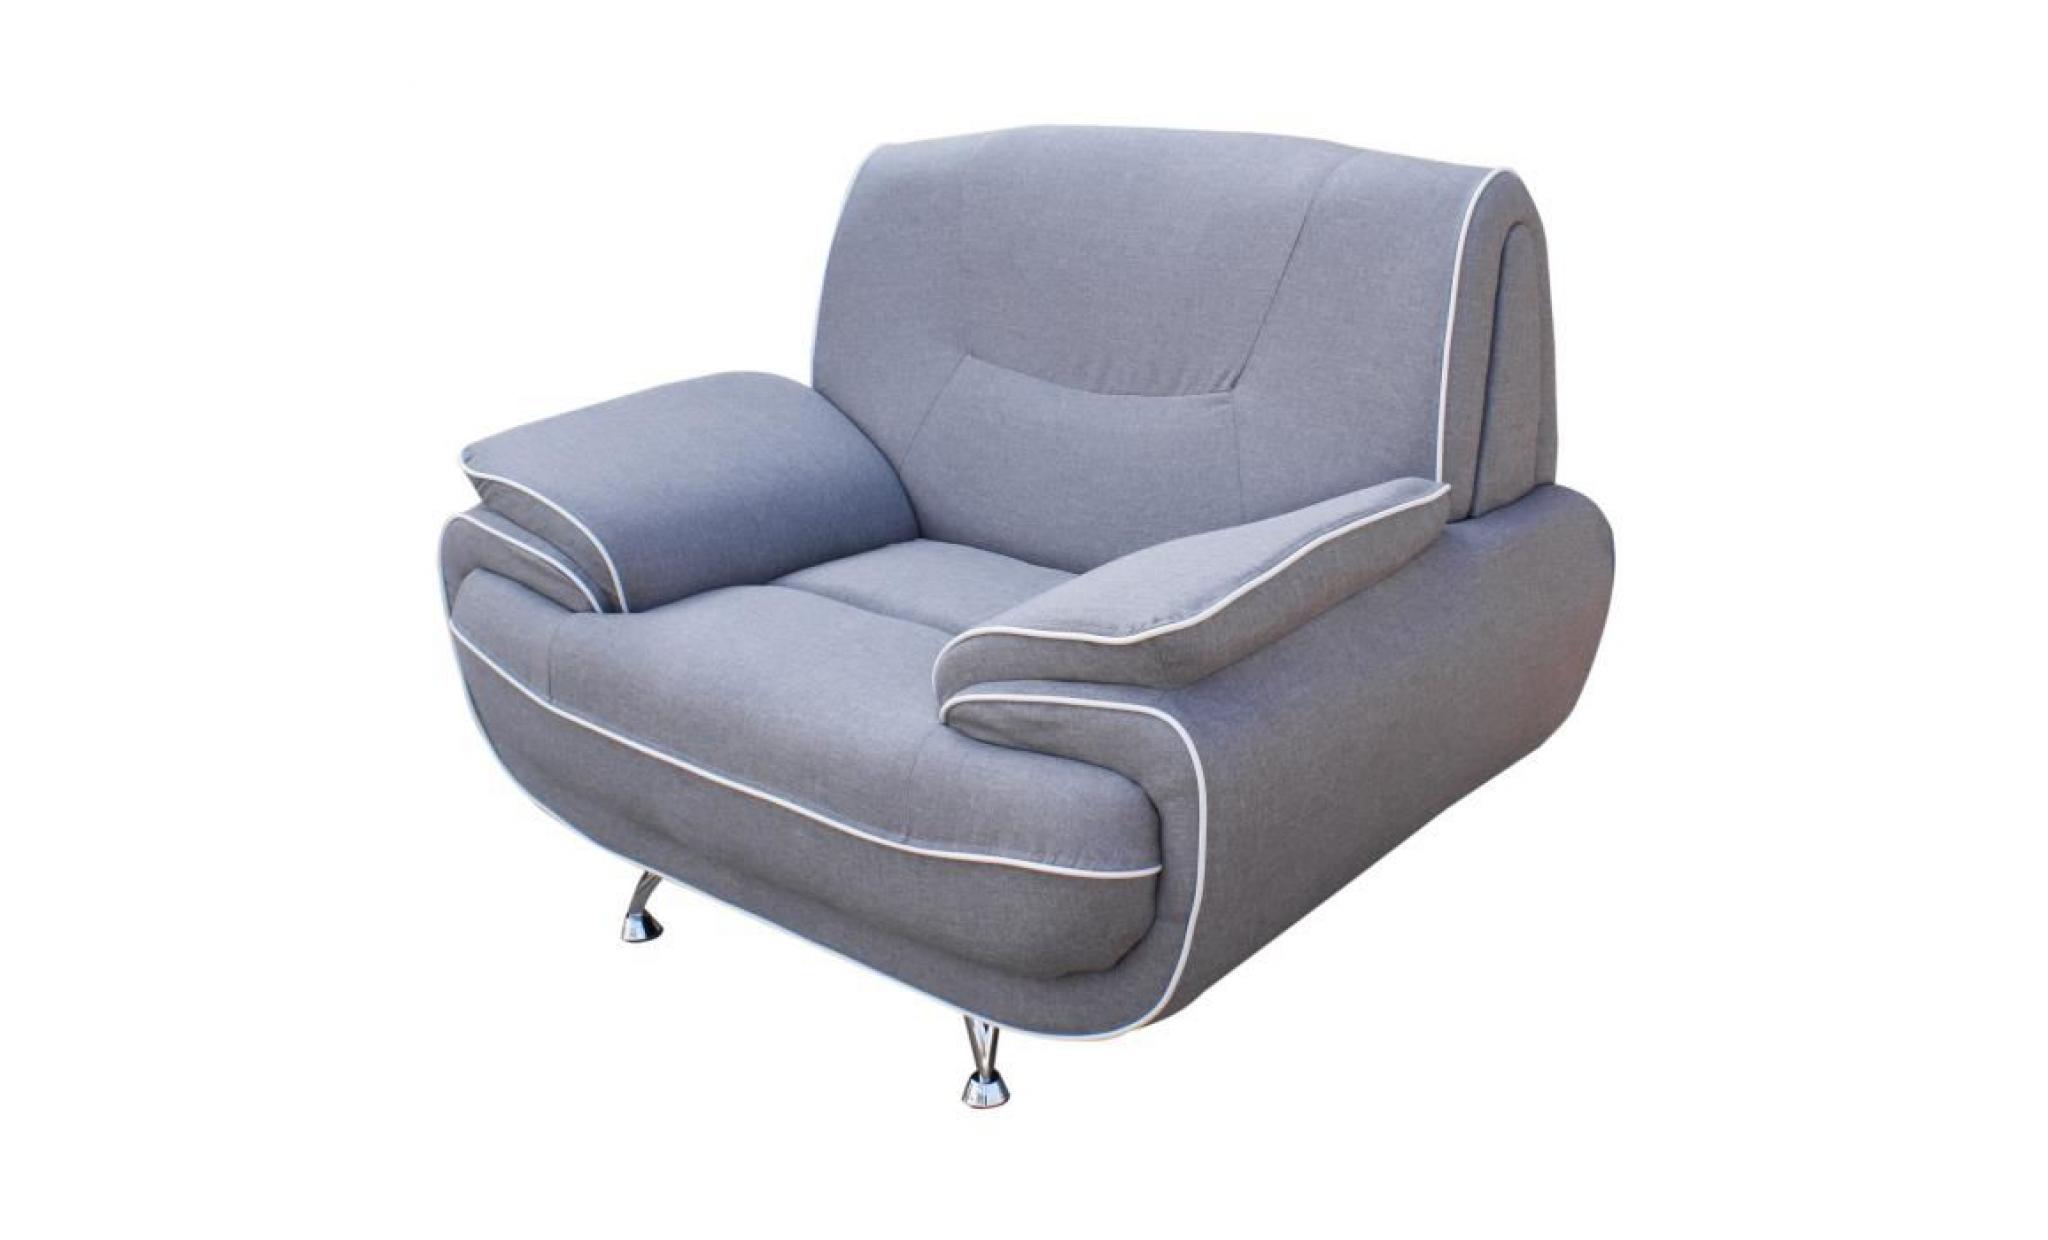 spacio fauteuil   tissu gris   contemporain   l 134 x p 86 cm